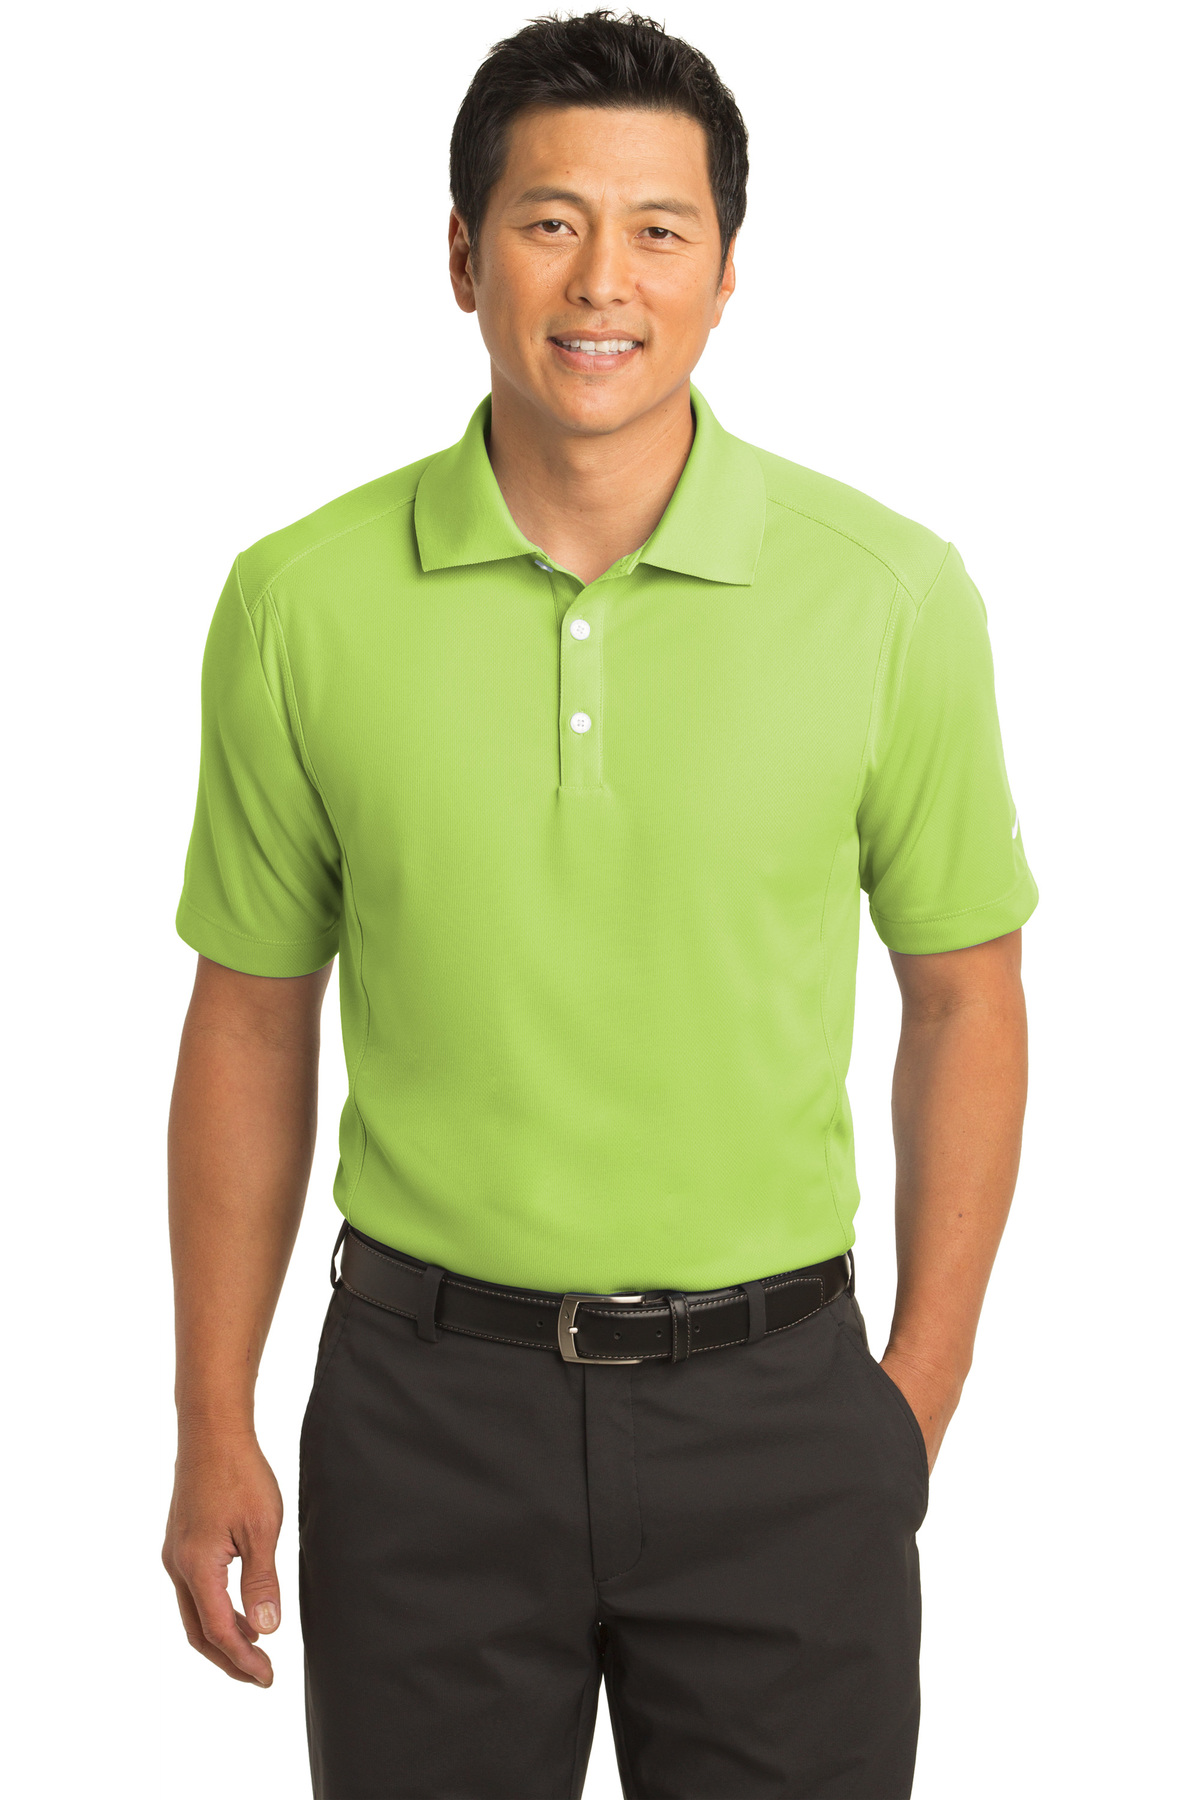 green nike golf shirt